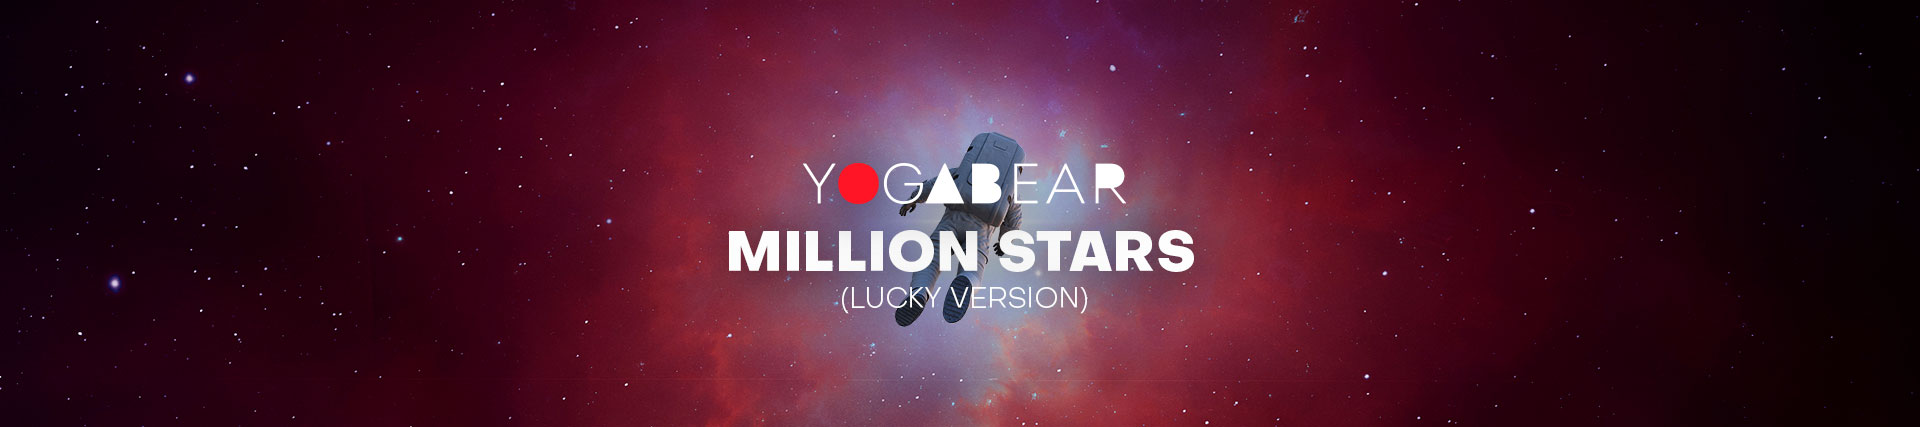 Yoga Bear - Million Stars